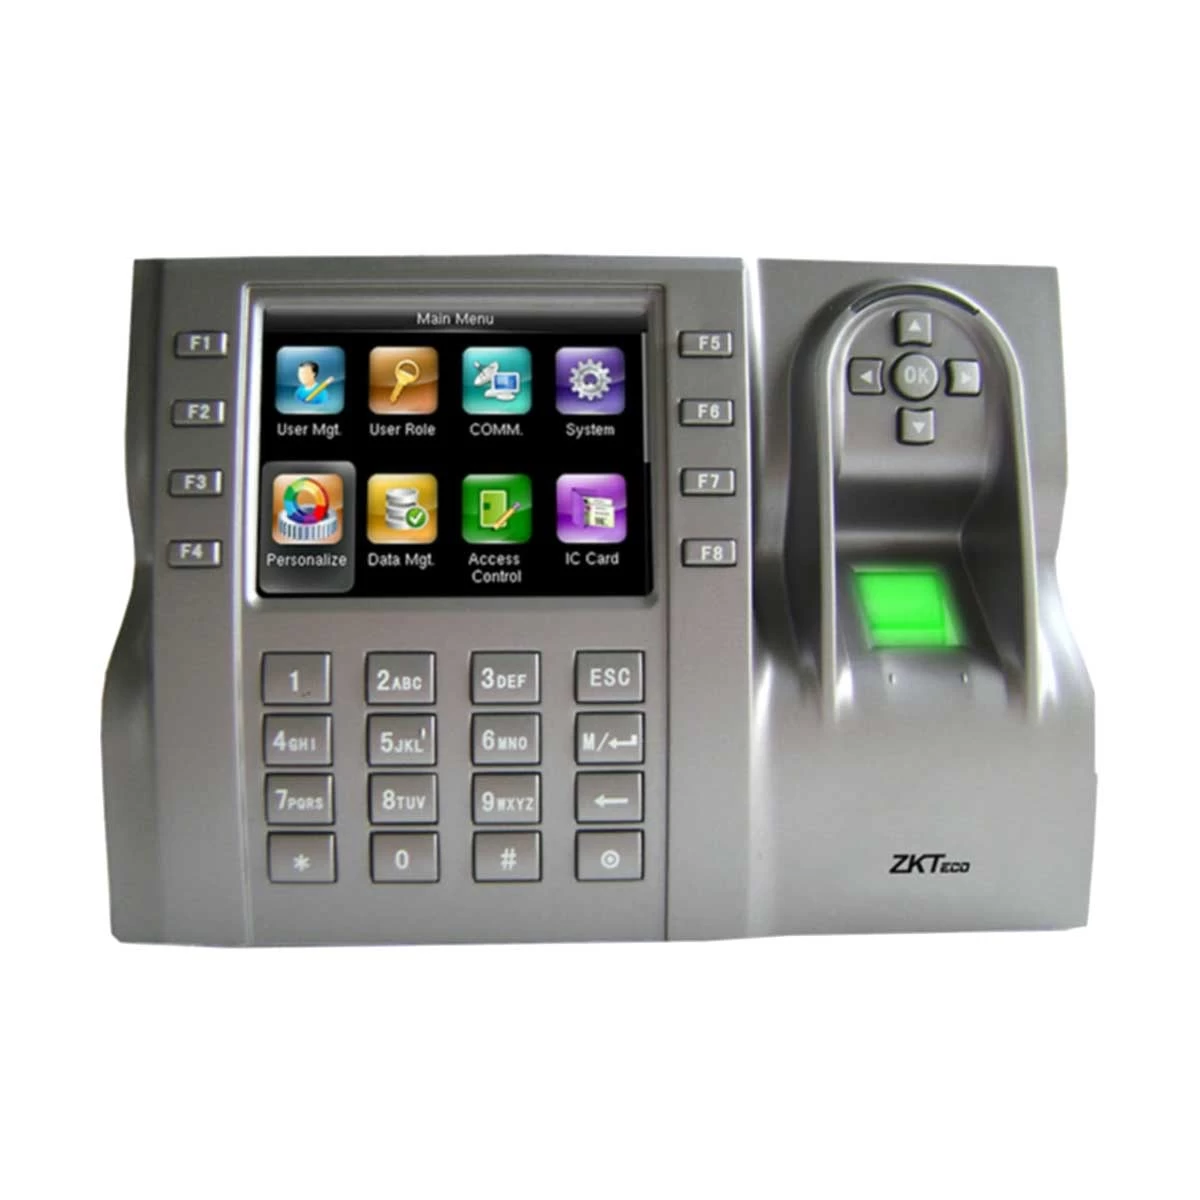 ZKTeco IClock 580 Fingerprint Time Attendance And Access Control Terminal buysalesbd